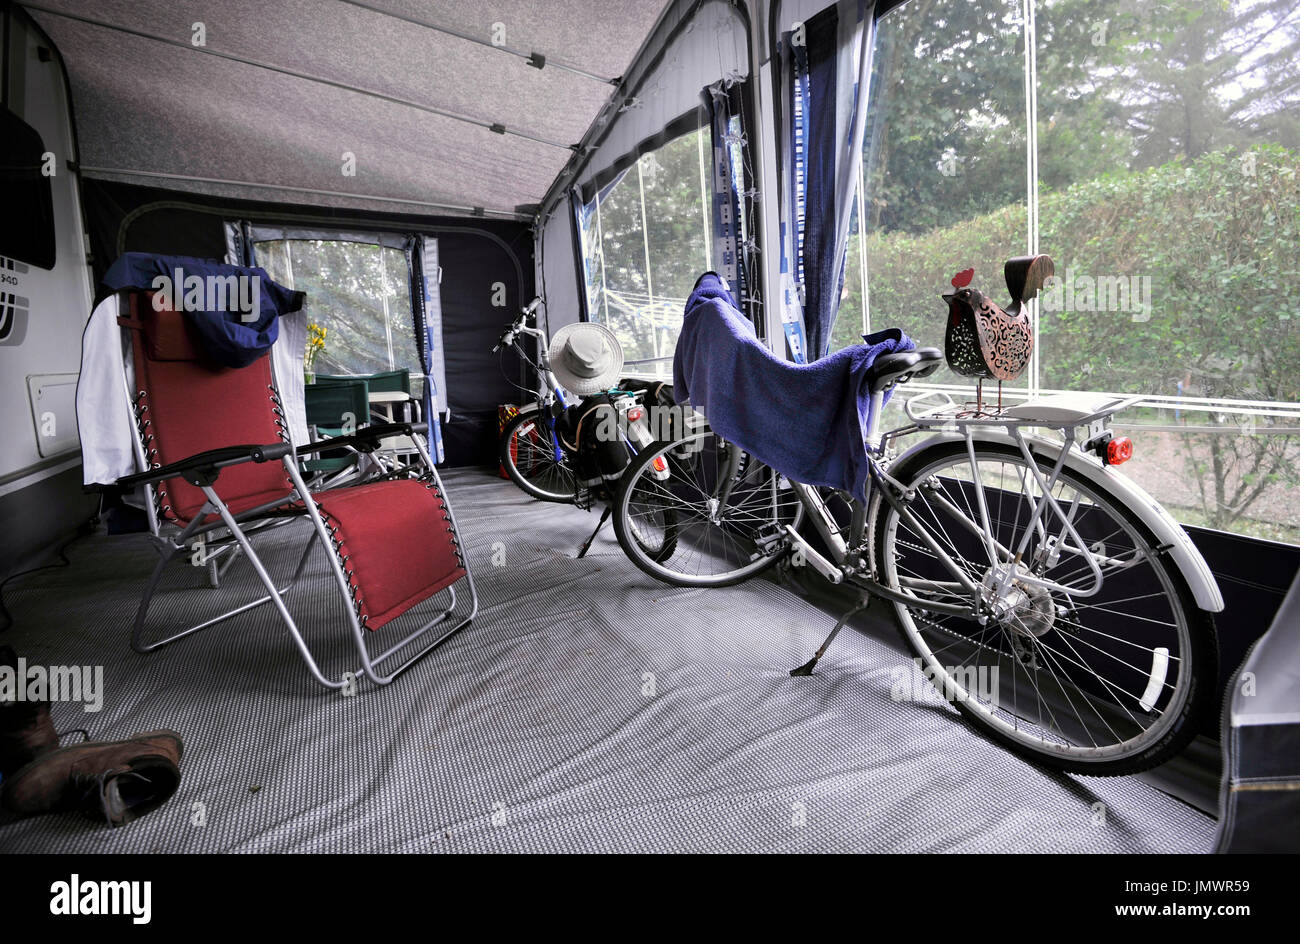 bikes stored inside caravan awning Stock Photo